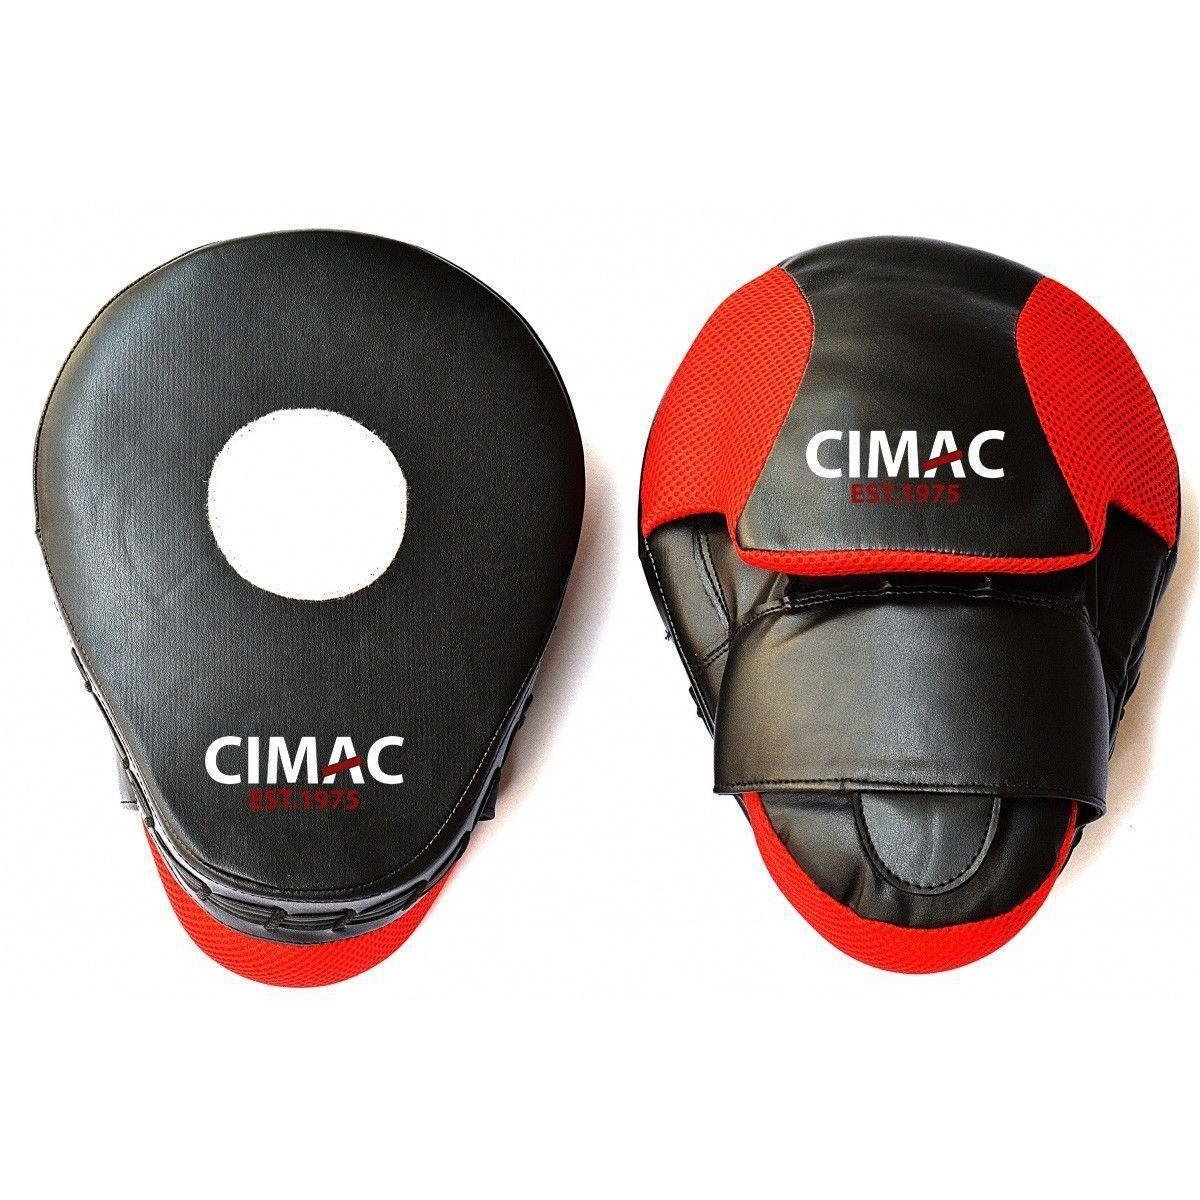 Cimac Curved Boxing Focus Mitts Black Hook & Jab Pads